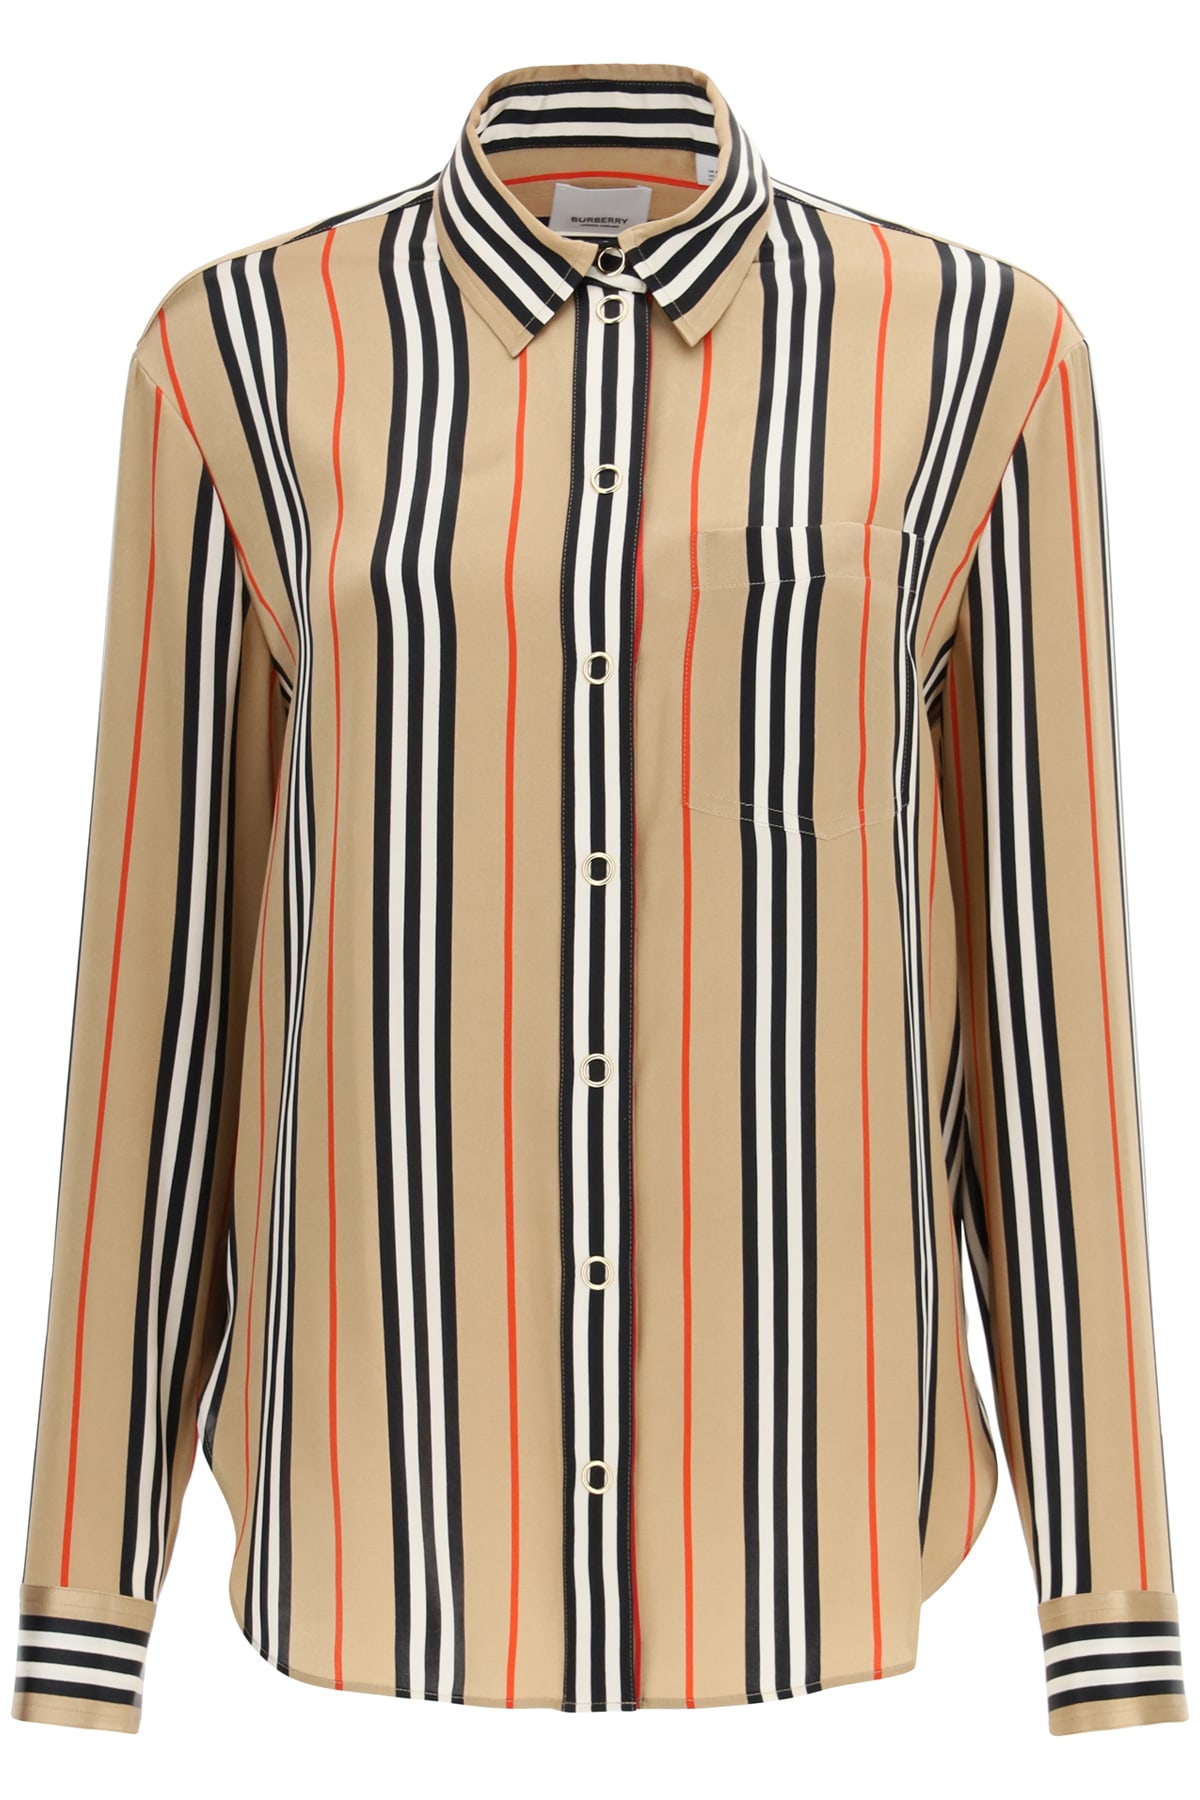 Burberry Striped Silk Shirt